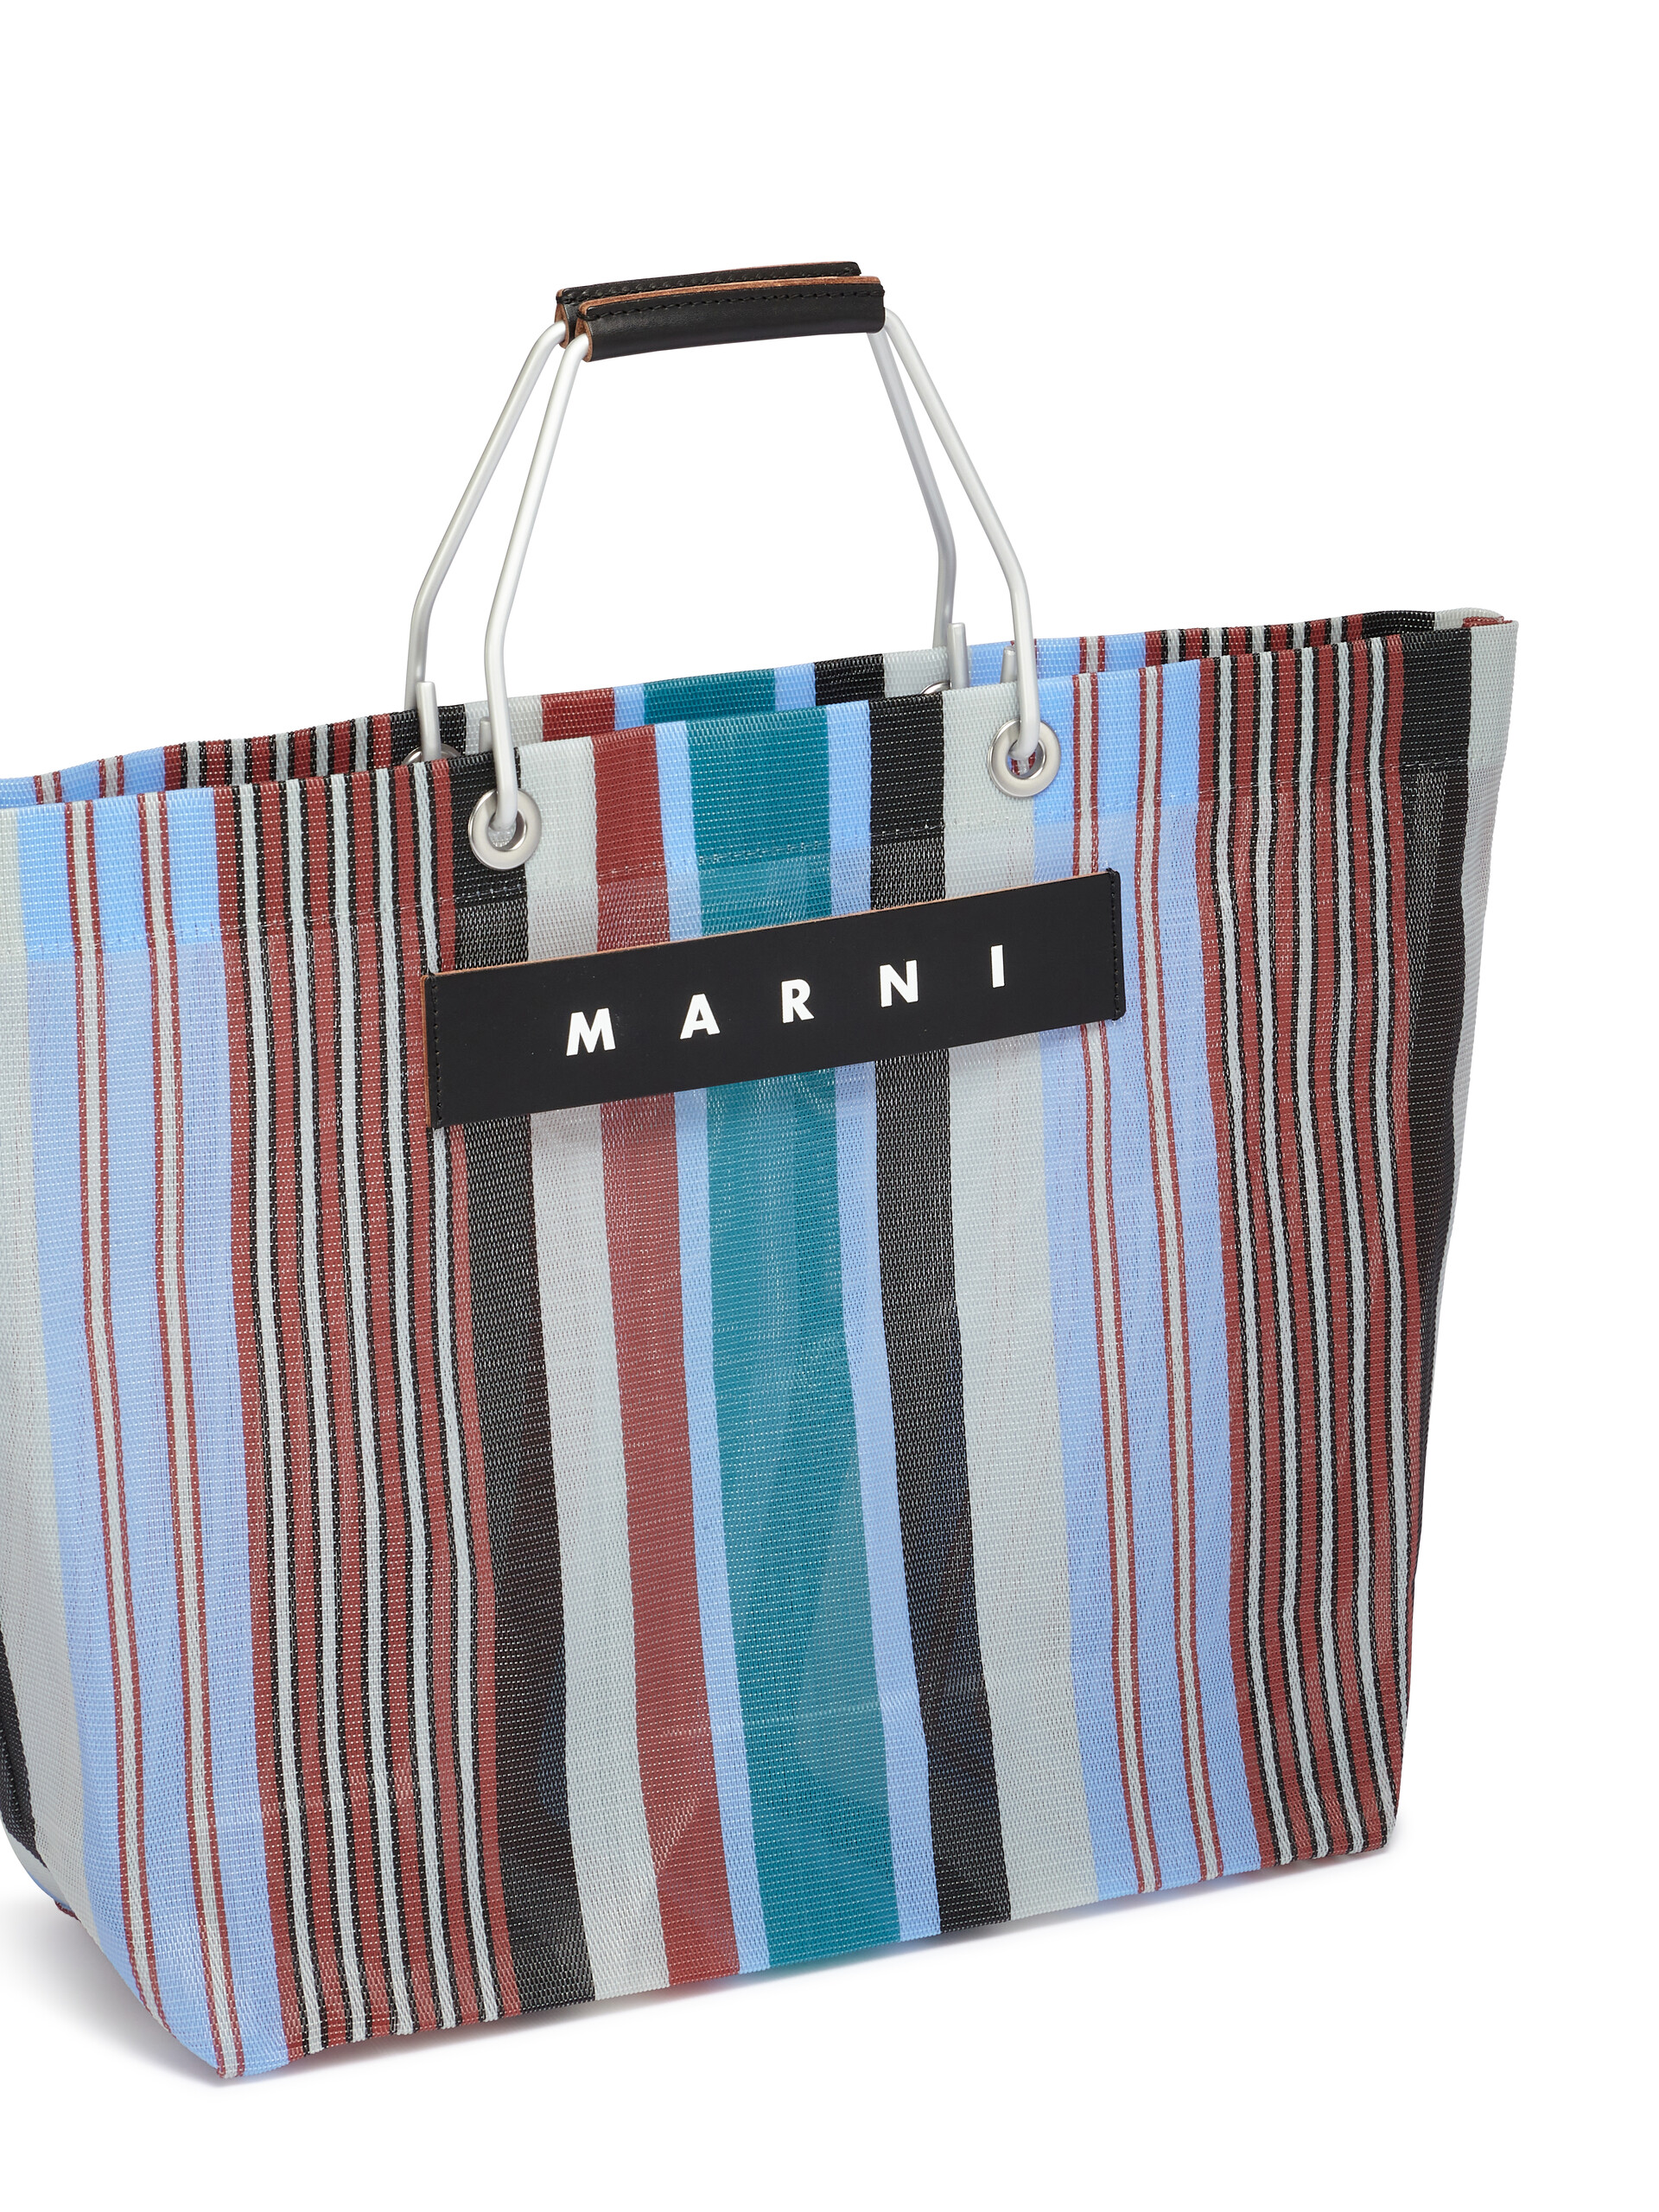 MARNI MARKET STRIPE multicolor bag - Bags - Image 4